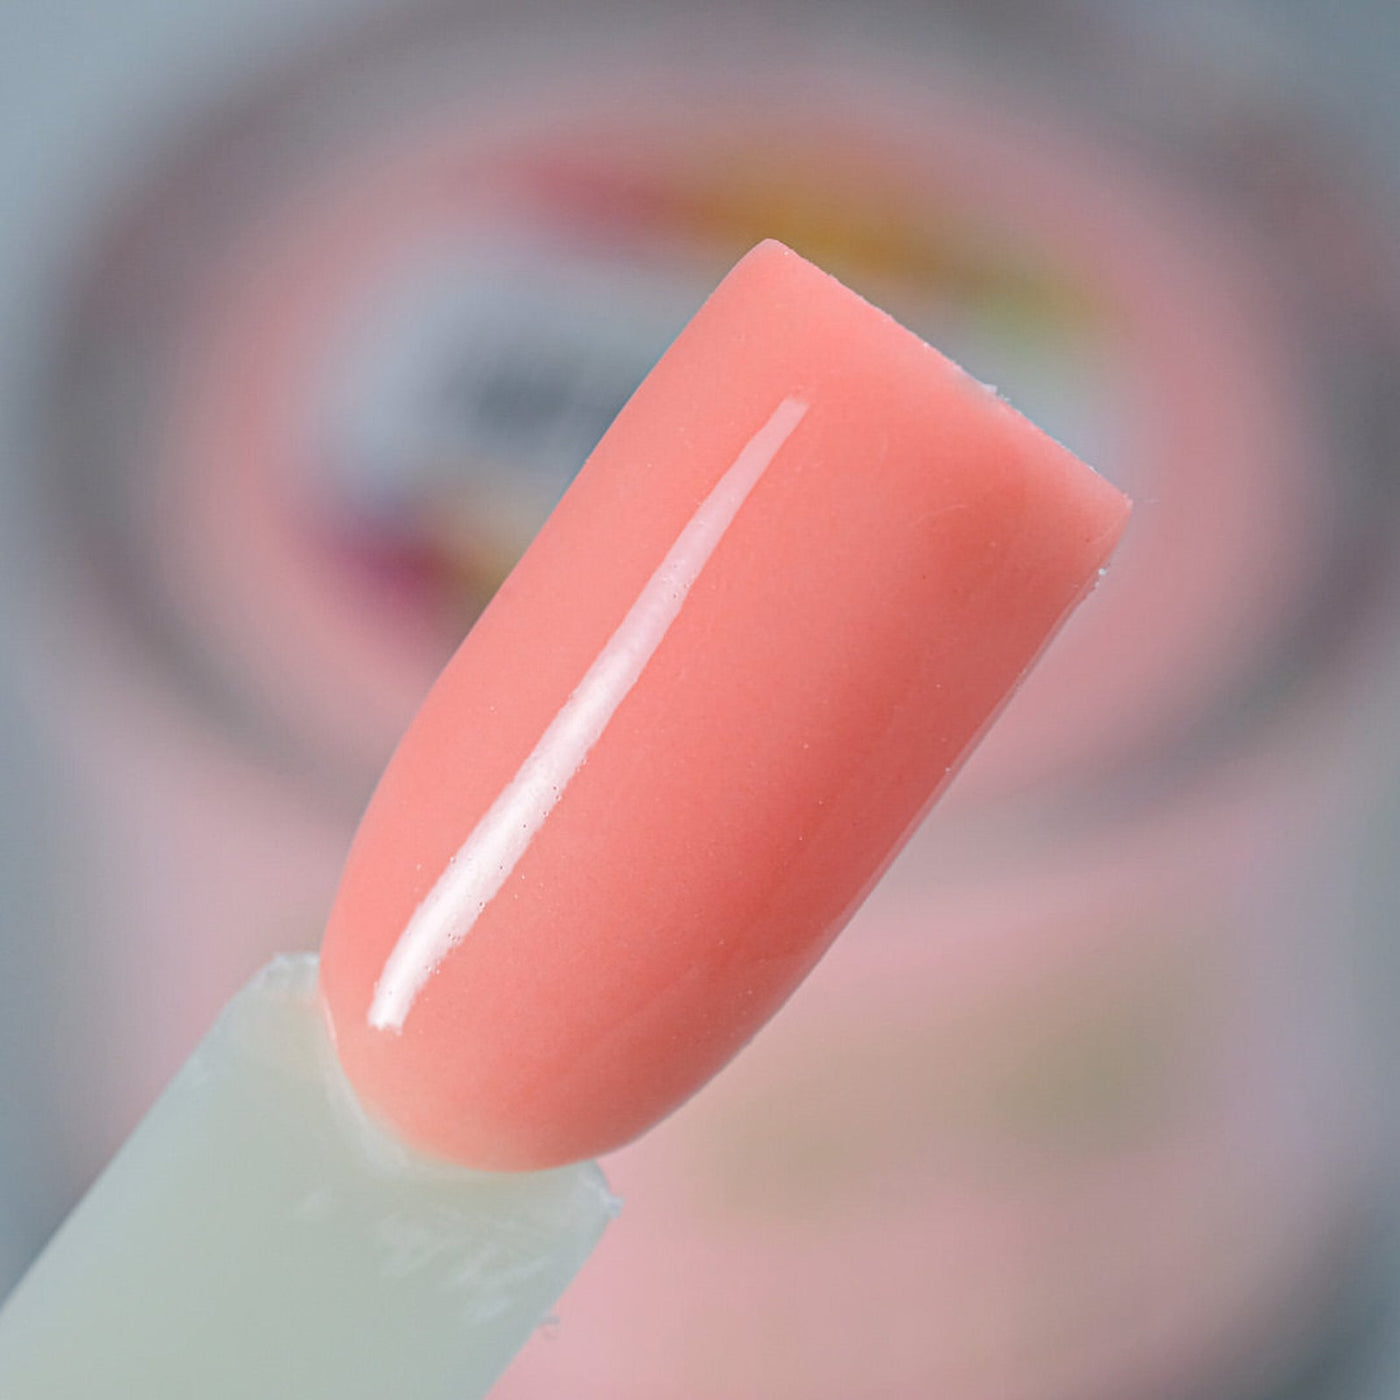 SNS Gelous Color Dipping Powder BD02 Spandex Ballet (43g) pink creme swatch on nail